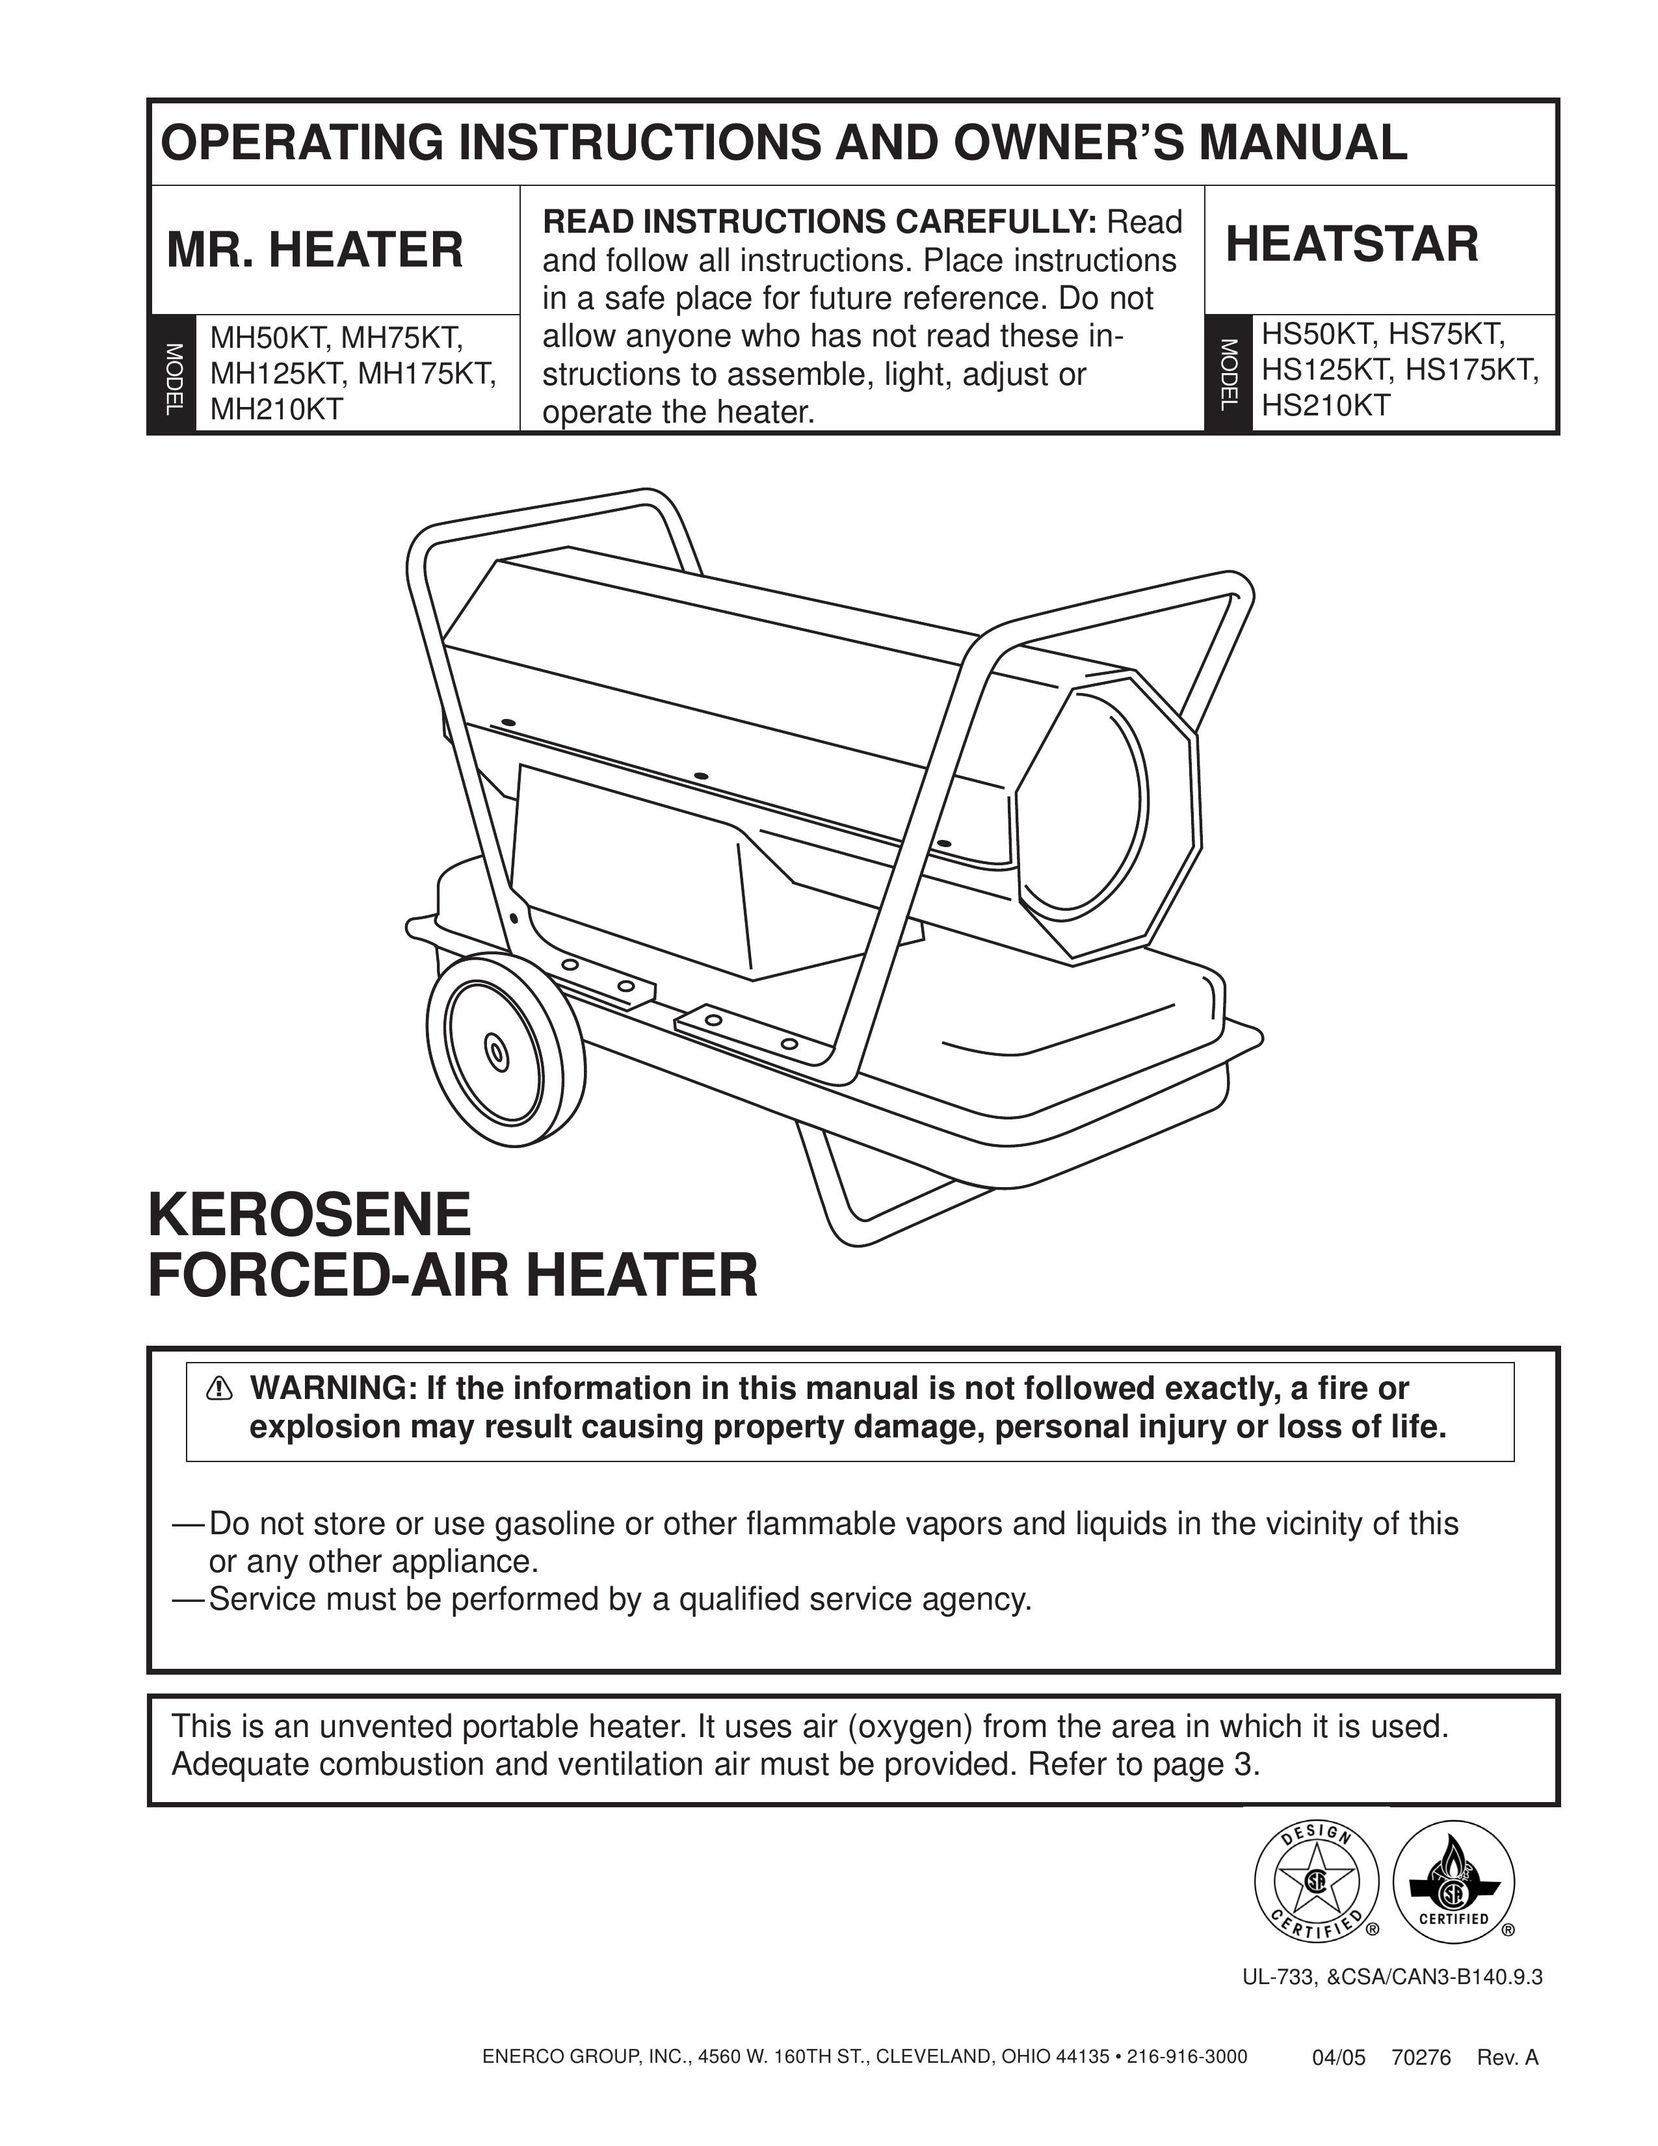 Enerco HS210KT Gas Heater User Manual